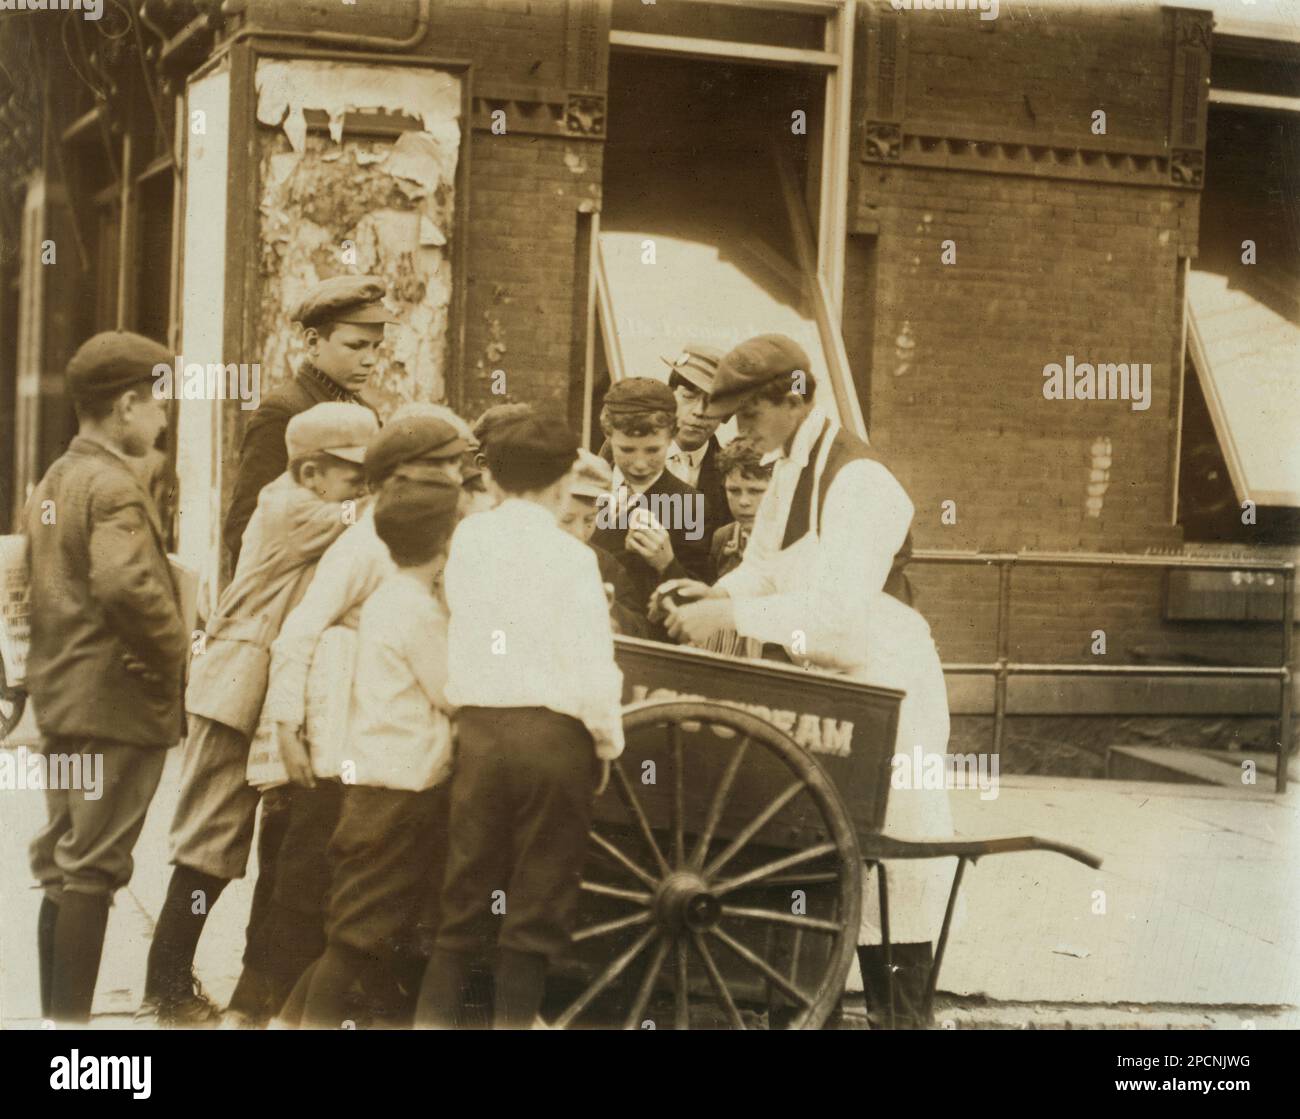 1910 , May, Wilmington, Delaware, USA : wo das Geld des Newsboys hingeht. DAS EIS - NEWSBOYS , FOTOS VON LEWIS HINE ( 1874 - 1940 ) - - EIS - GELATAIO - NEWSBOYS - BAMBINI -- LAVORATORI - BAMBINO - KINDERARBEITER - FABRIK - KINDHEIT - KINDHEIT - KIDNIEN - LAVORO MINORILE - LAVORO - ARBEIT - LAVORATORE - ARBEITNEHMER - OPERAIO - CLASSE OPERAIA LAVORATRICE - ARBEITERKLASSE - OPERAI - LAVORATORI - LAVORO - UNITI D' AMERICA - FOTO STORICHE - GESCHICHTE - PORTRÄT - RITRATTO - TEMPI MODERNI - MODERN TIMES - HAT - CAPPELLO - TURNO DI LAVORO - GIORNALAIO - GIORNALAI - STRILLONI - VENDITORI DI GI Stockfoto